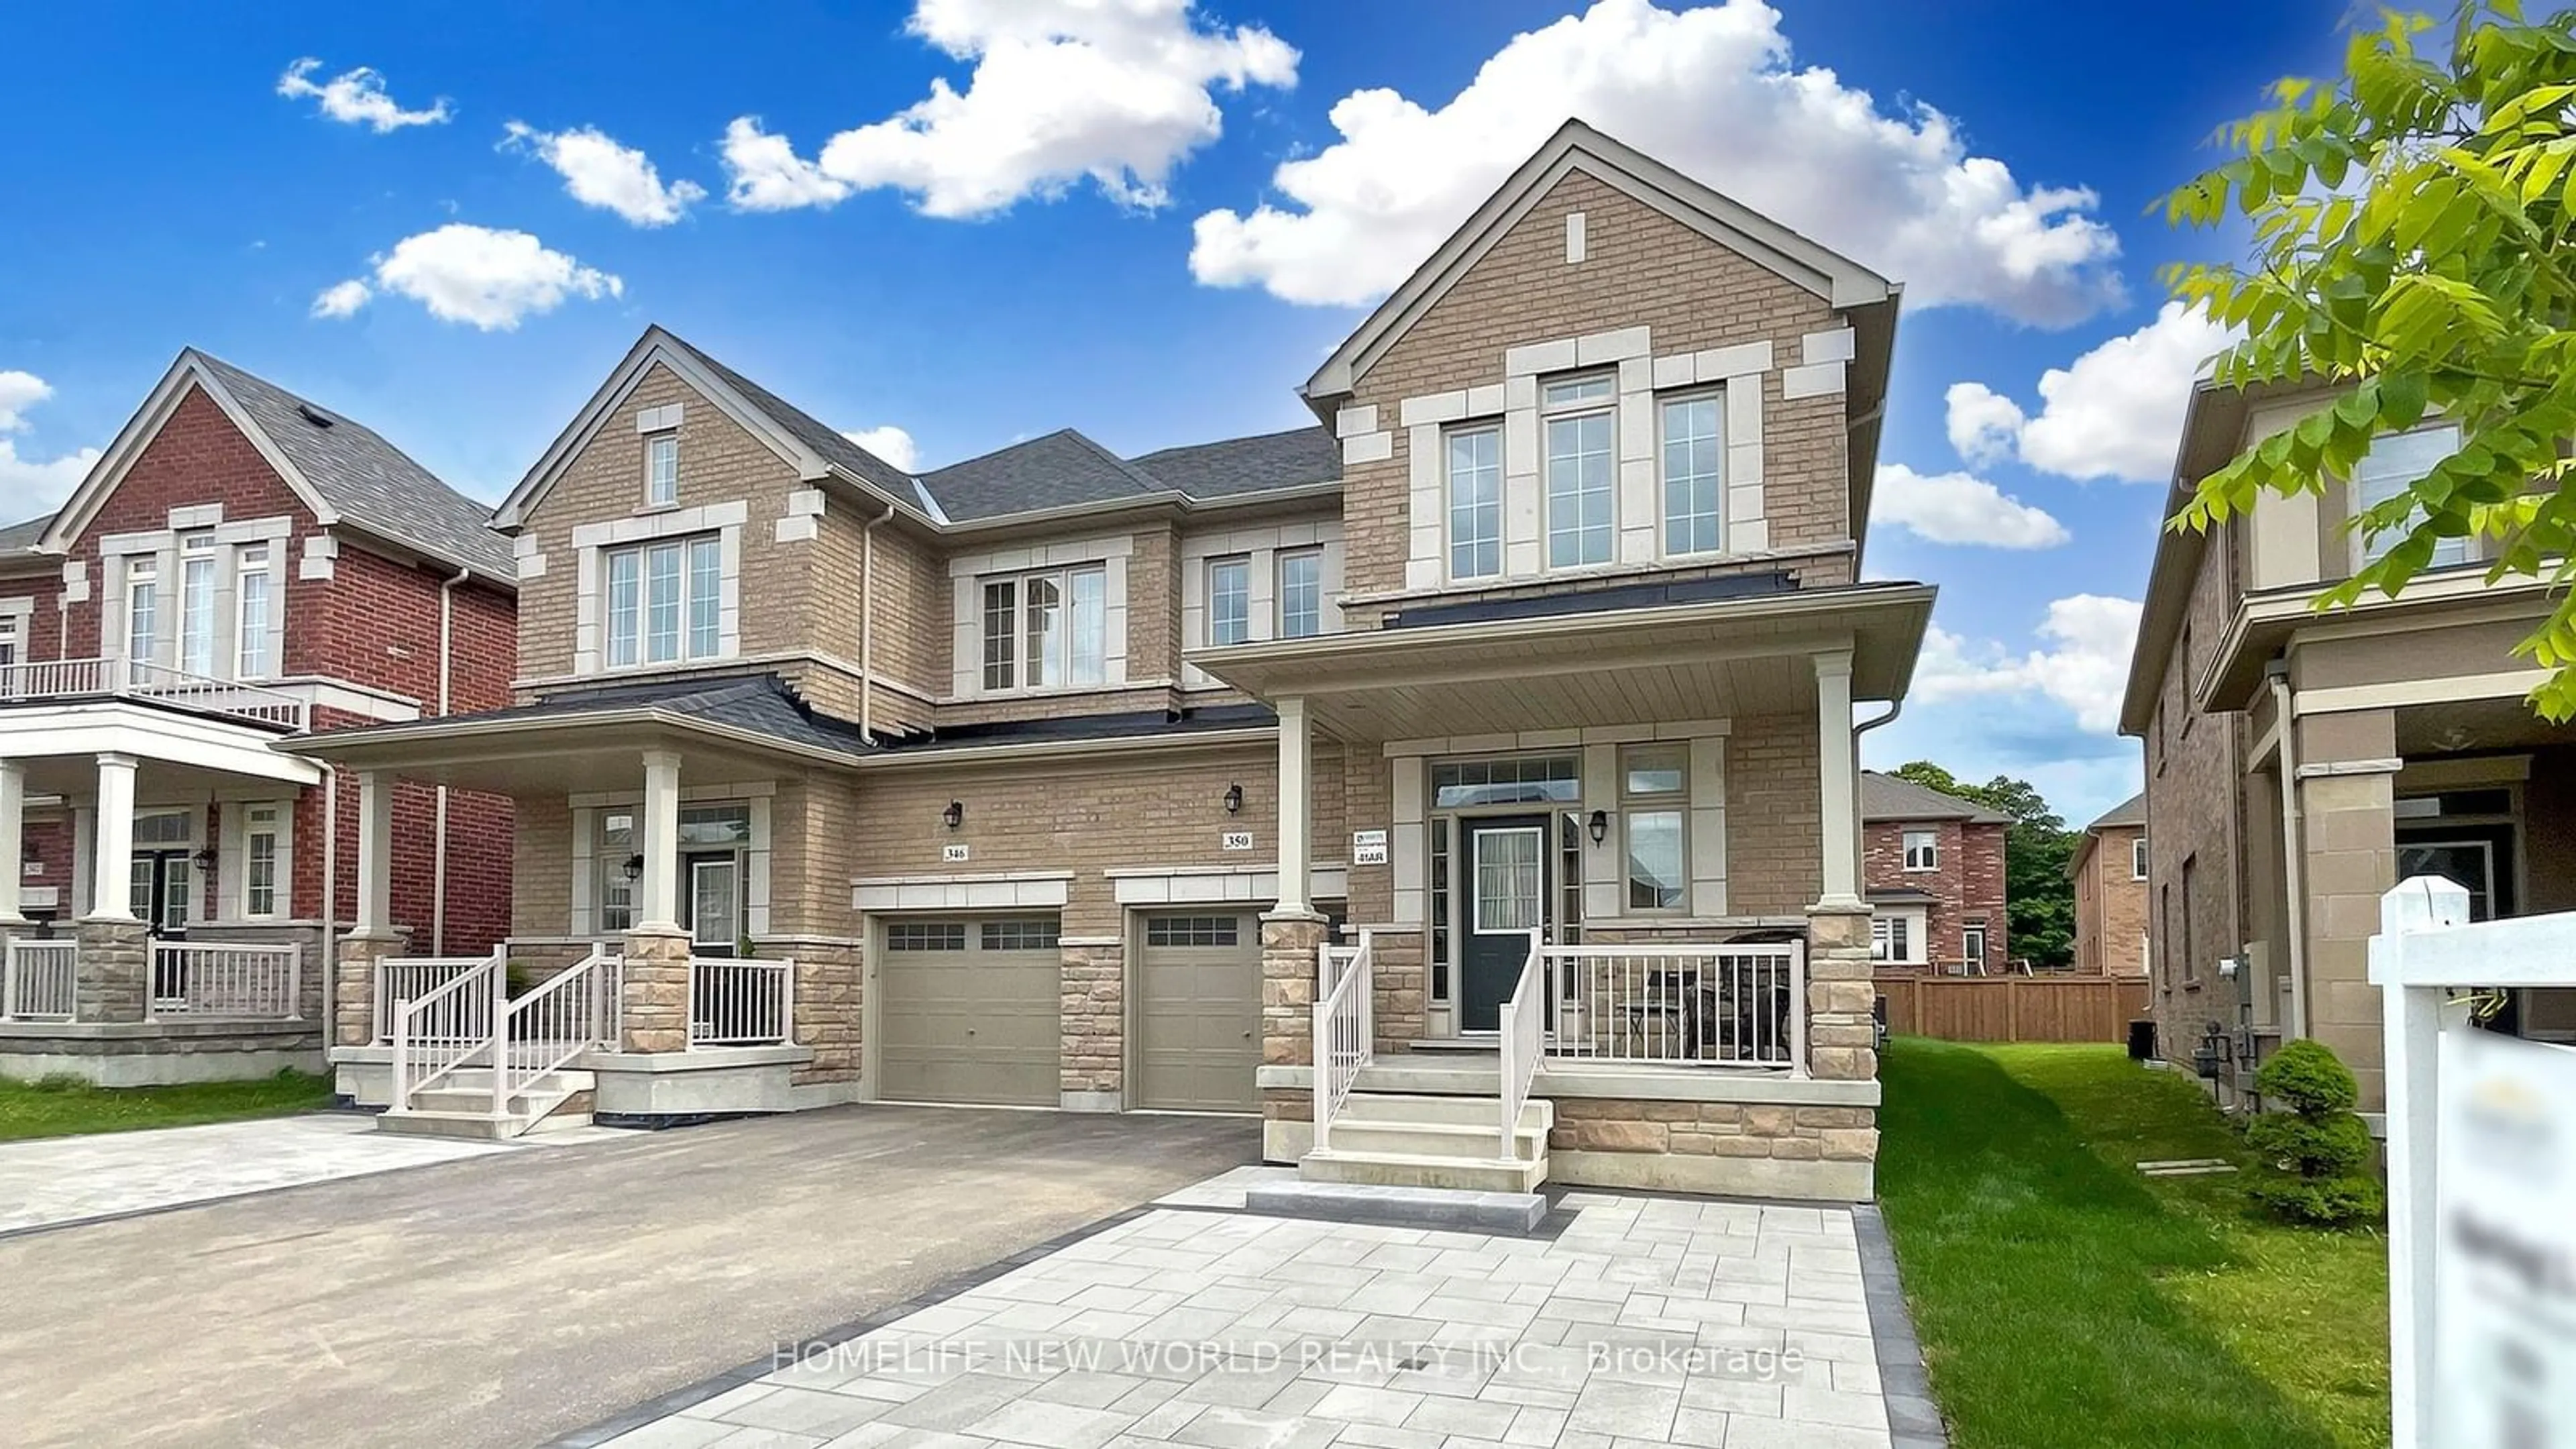 Home with brick exterior material for 350 Chouinard Way, Aurora Ontario L4G 1A6